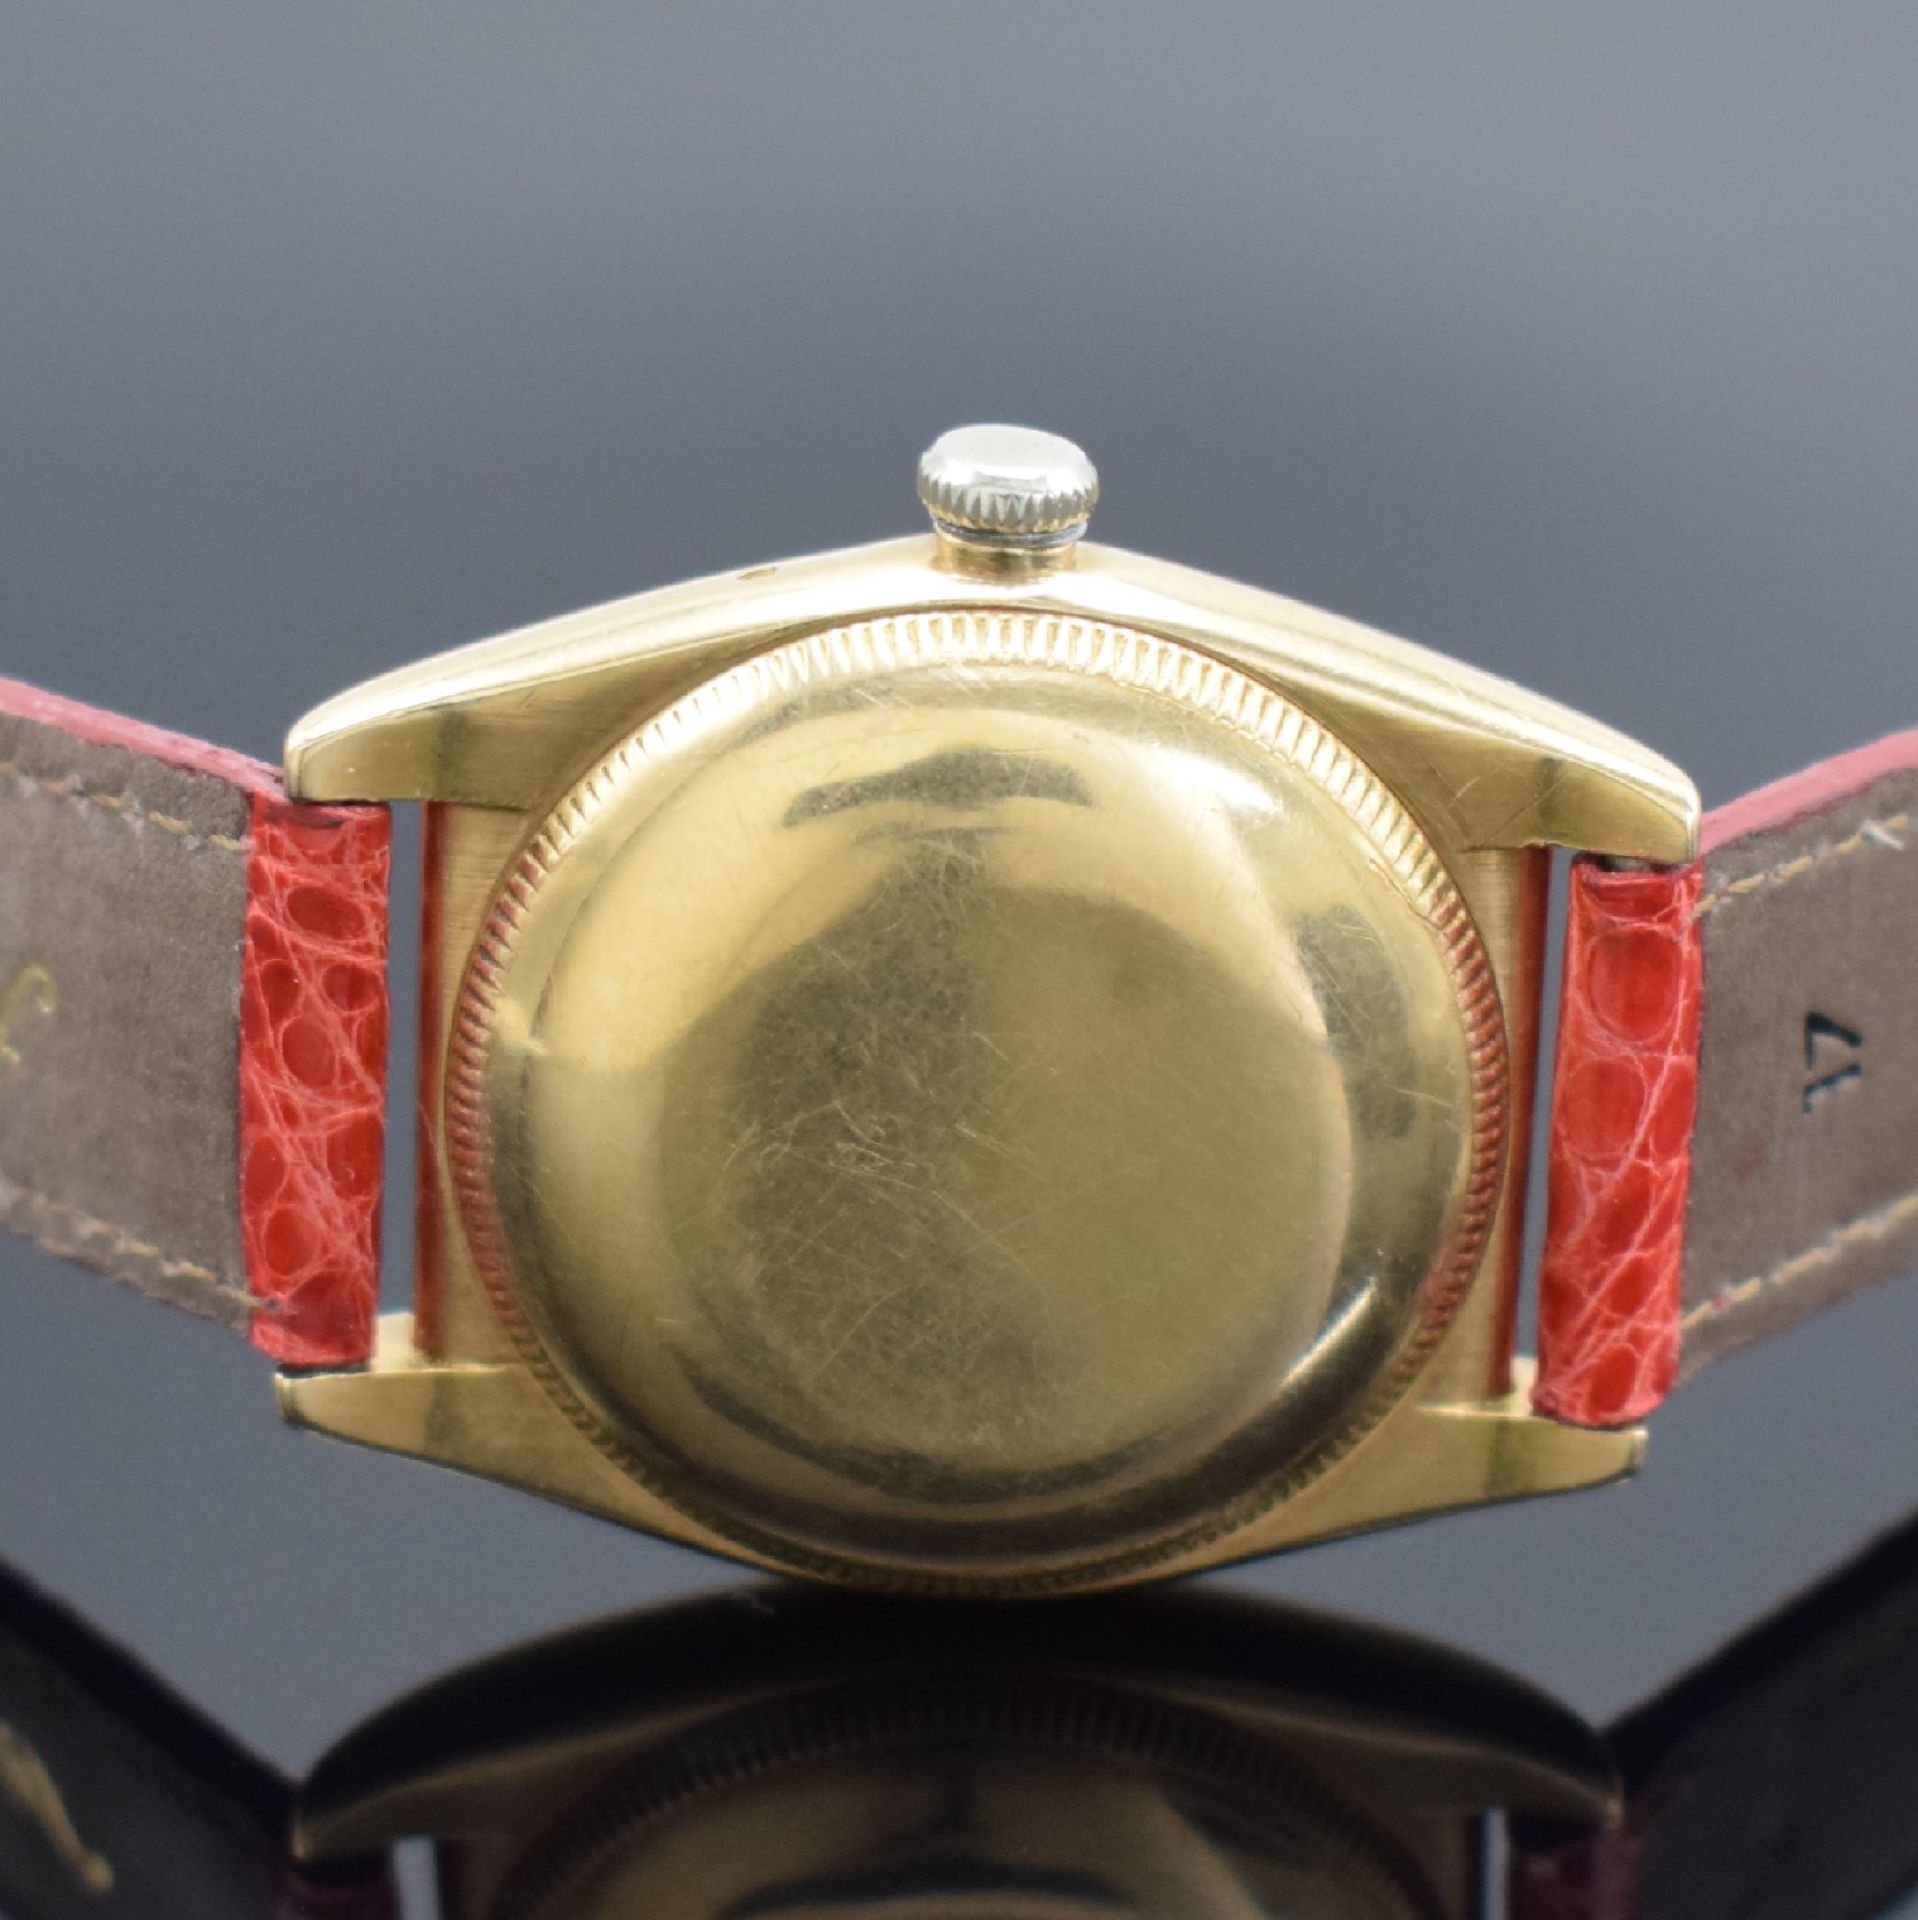 ROLEX seltene Armbanduhr Oyster Perpetual Chronometer sog. - Bild 4 aus 4